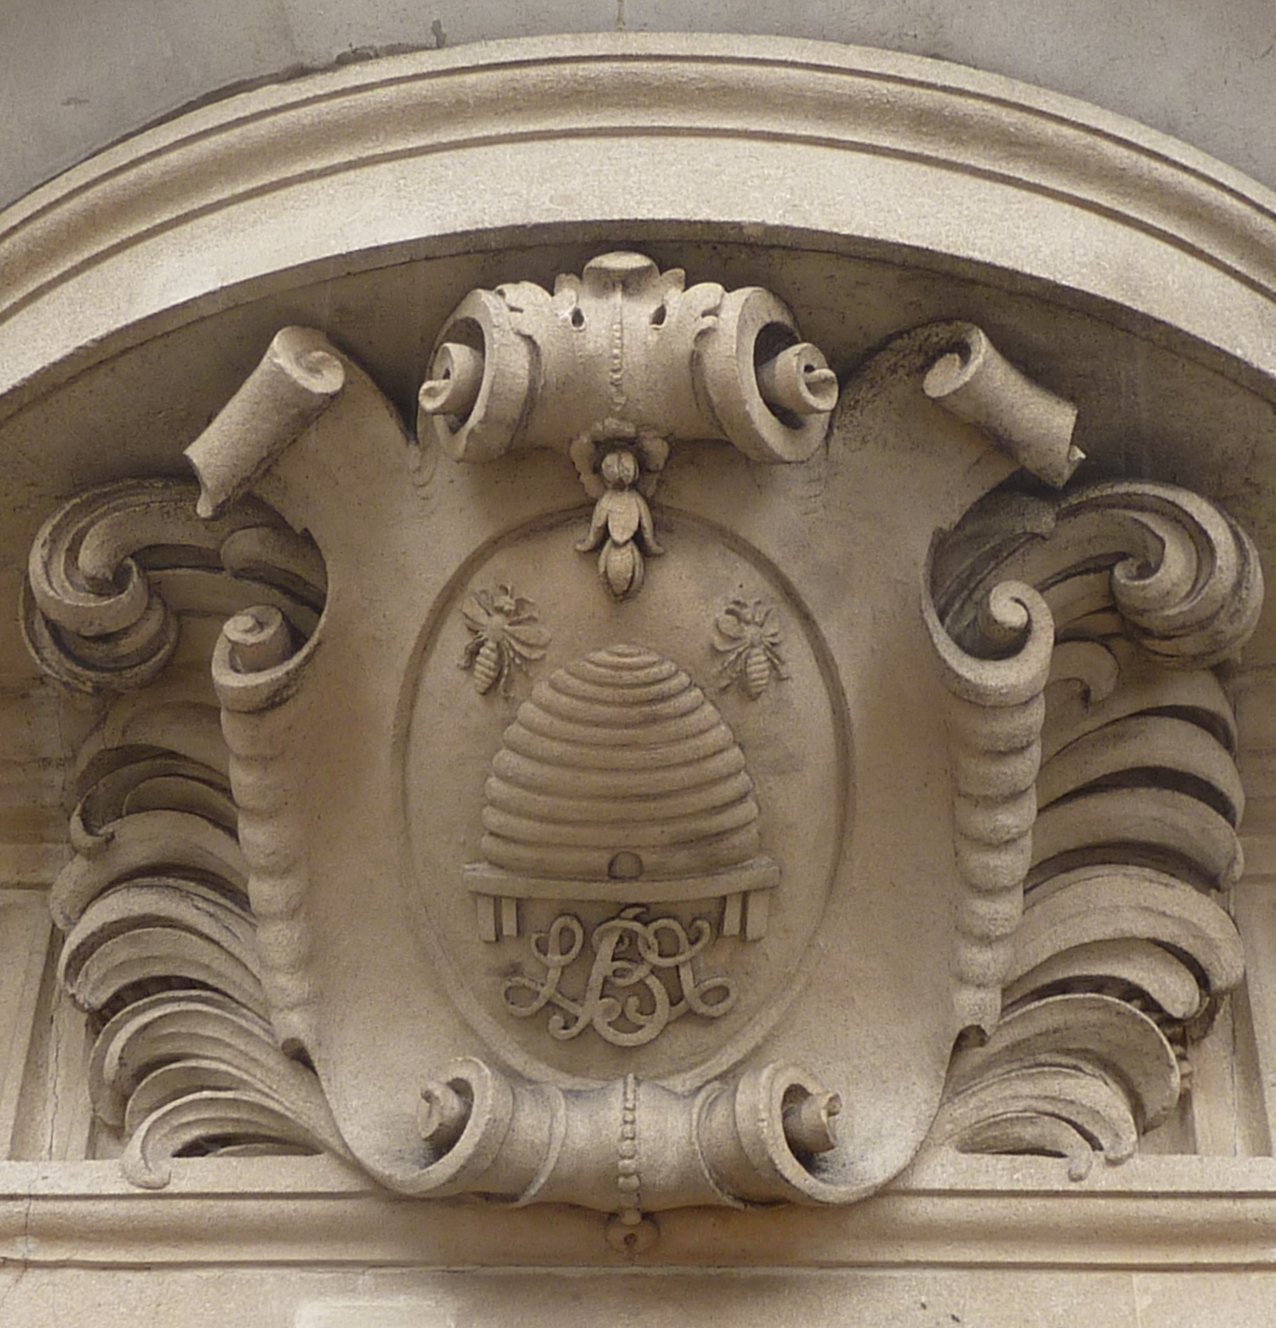 Beehive carved in stone in building above door